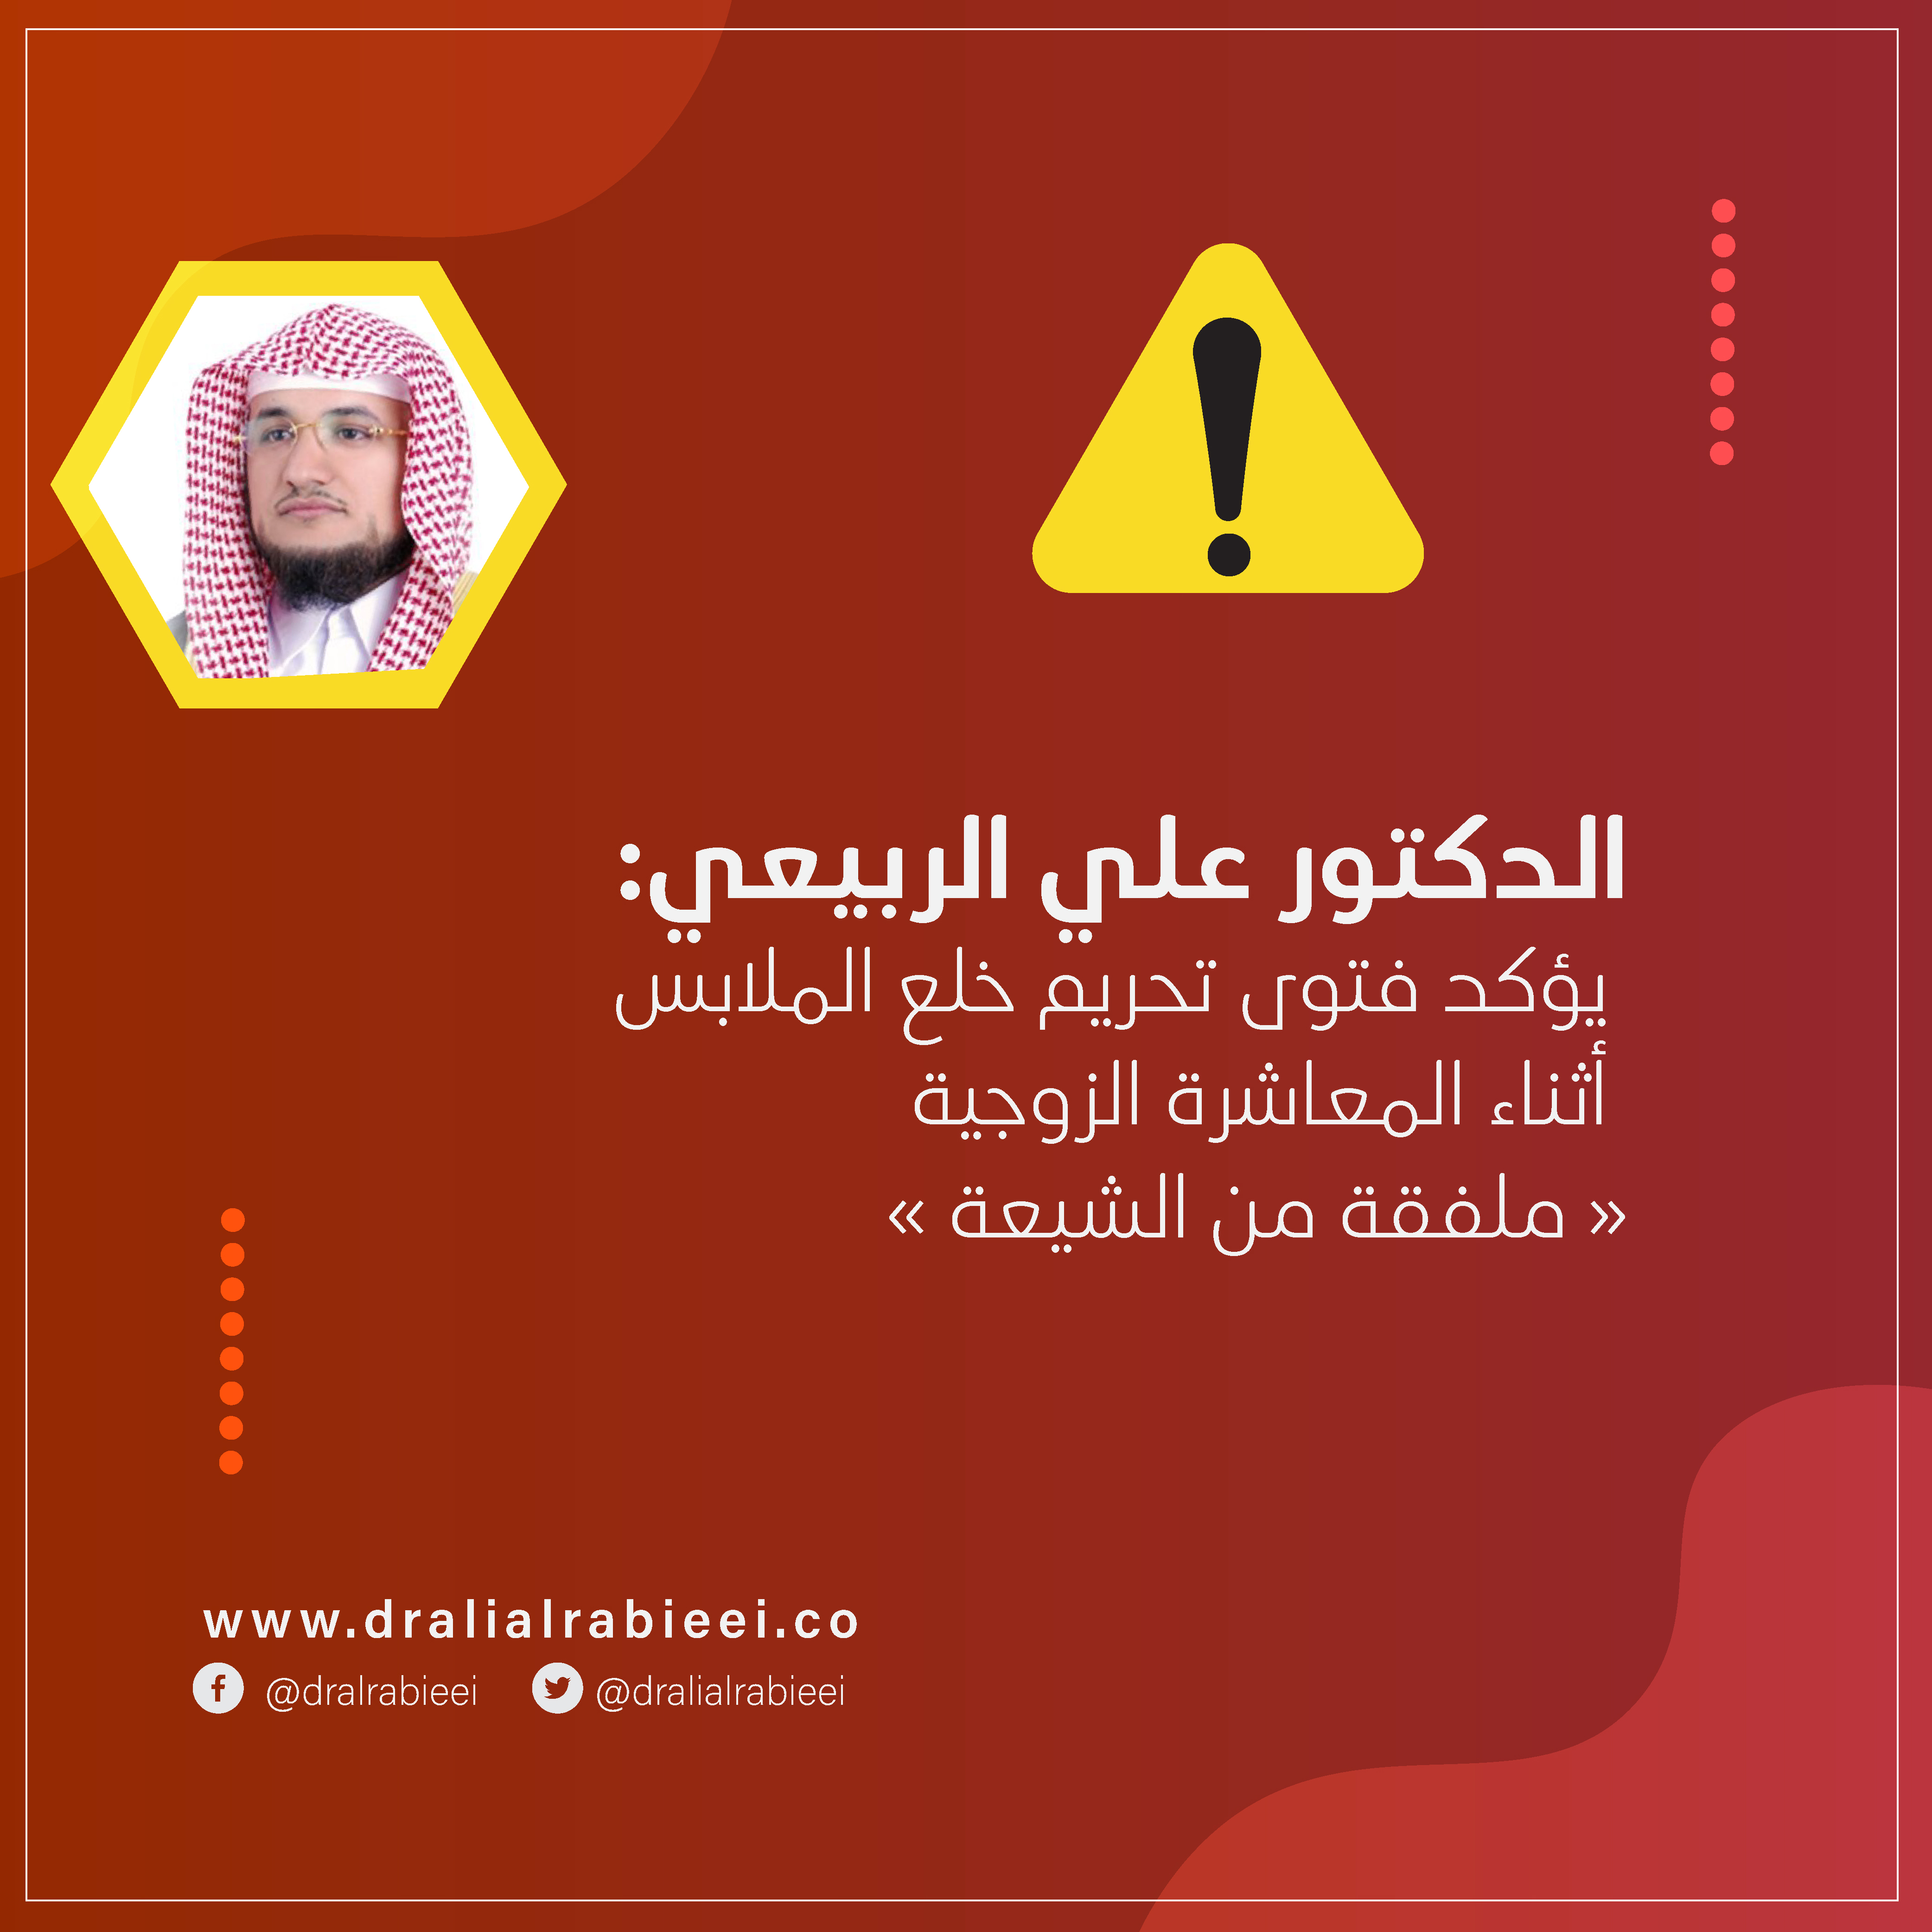 You are currently viewing الدكتور علي الربيعي: يؤكد فتوى تحريم خلع الملابس أثناء المعاشرة الزوجية « ملفقة من الشيعة »